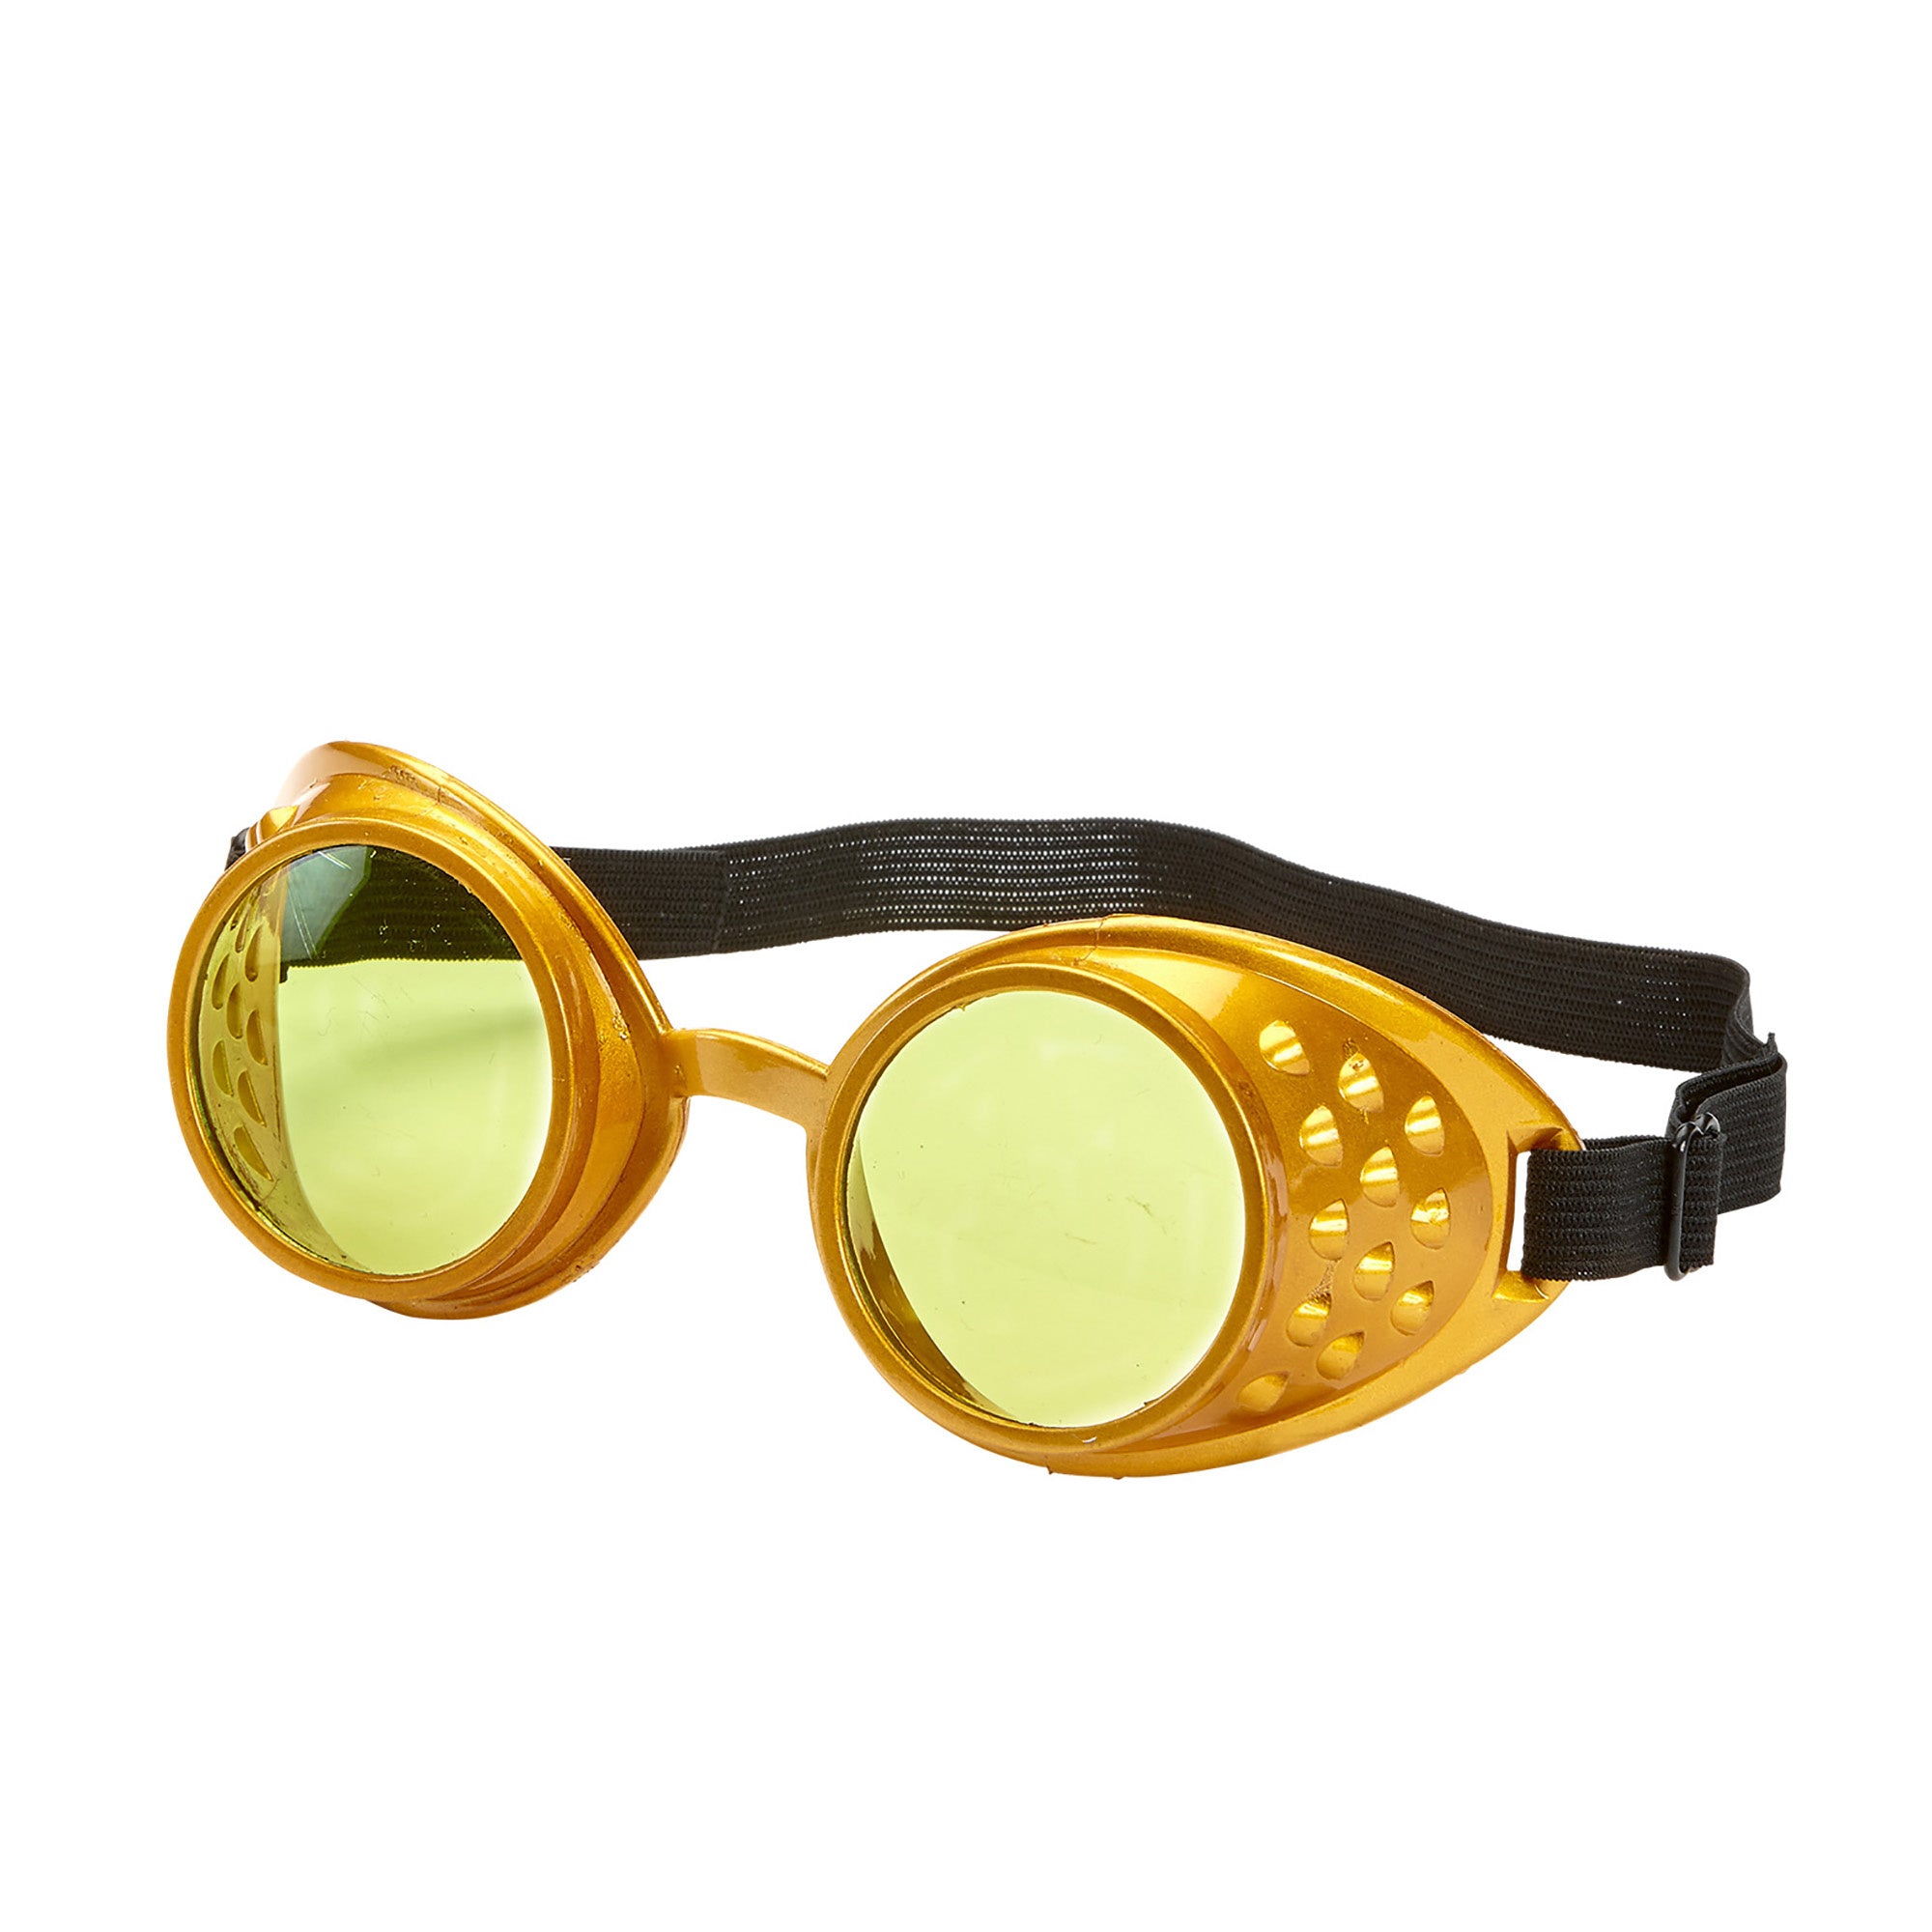 Widmann - Steampunk Kostuum - Stofbril Steampunk Goud Smokey Eyes - goud - Carnavalskleding - Verkleedkleding